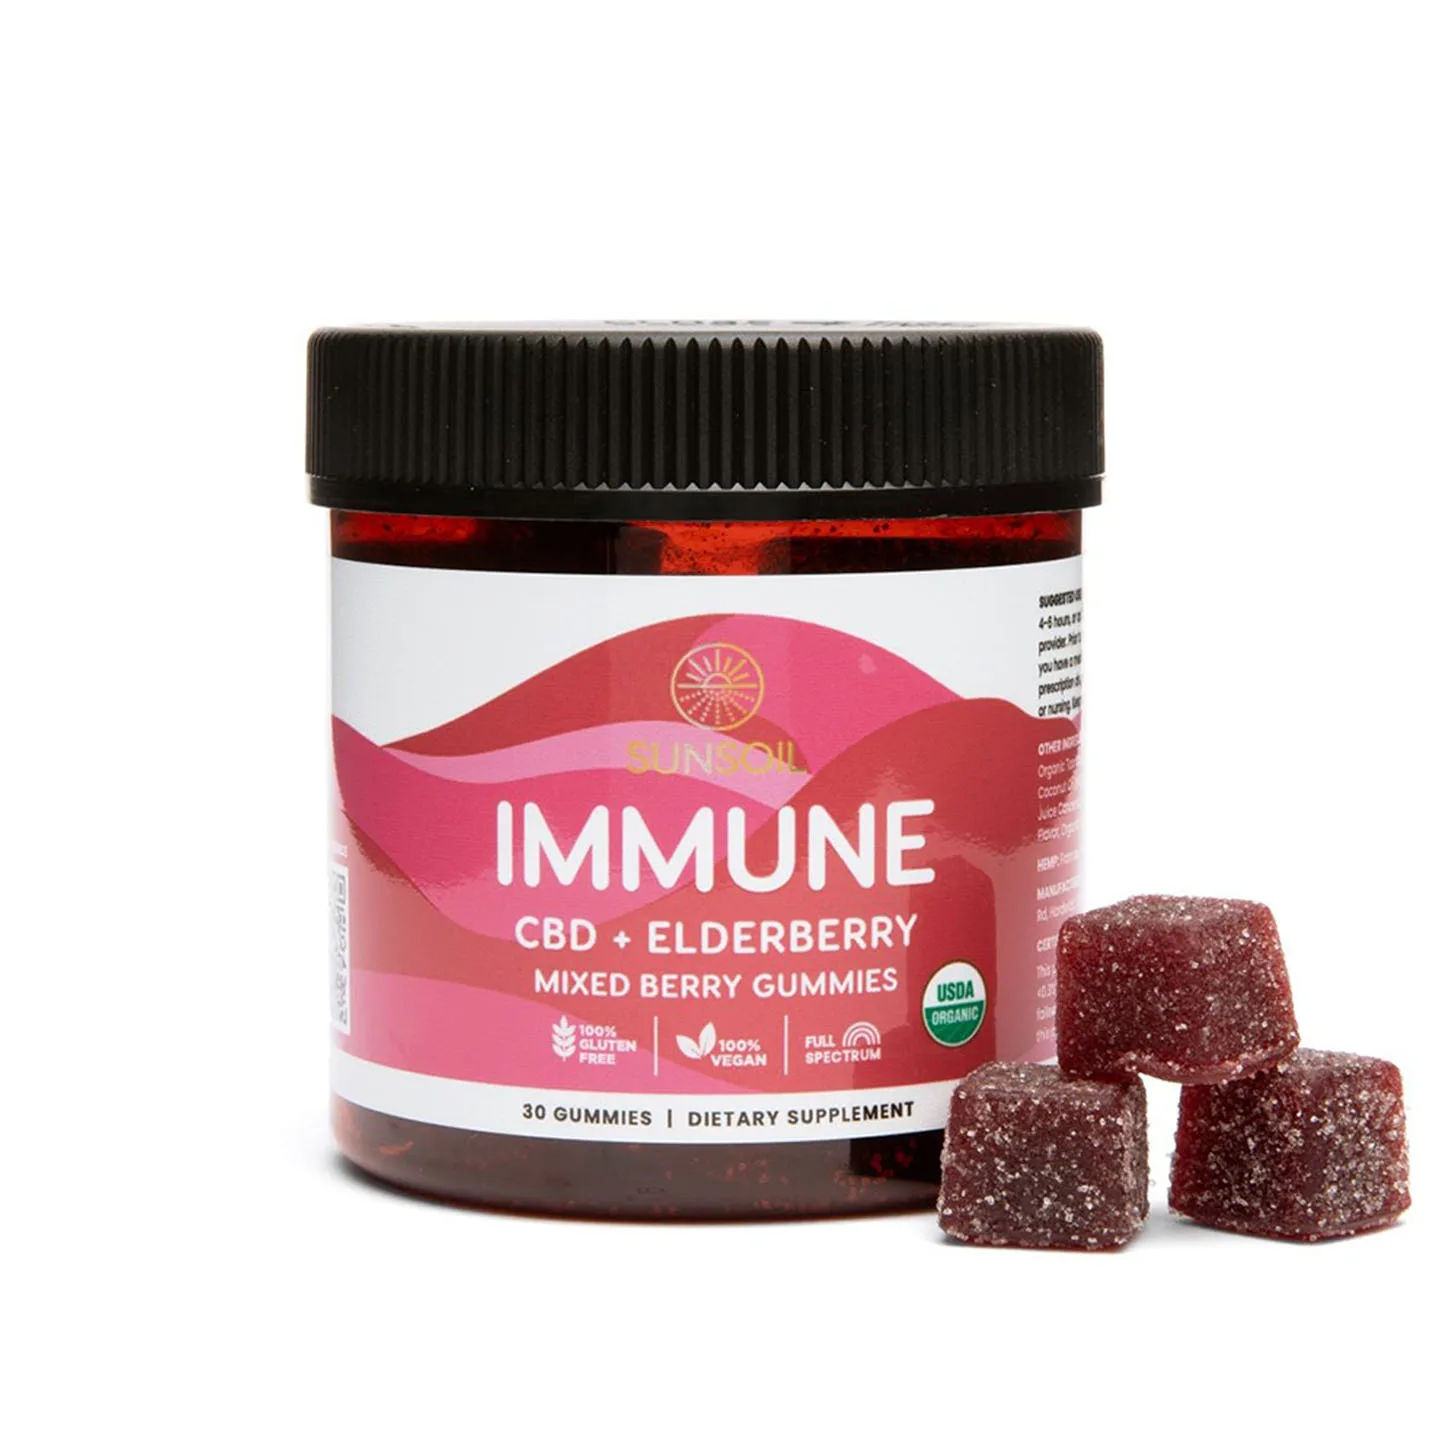 Sunsoil, Immune CBD Gummies, Mixed Berry, Full Spectrum, 30ct, 300mg CBD